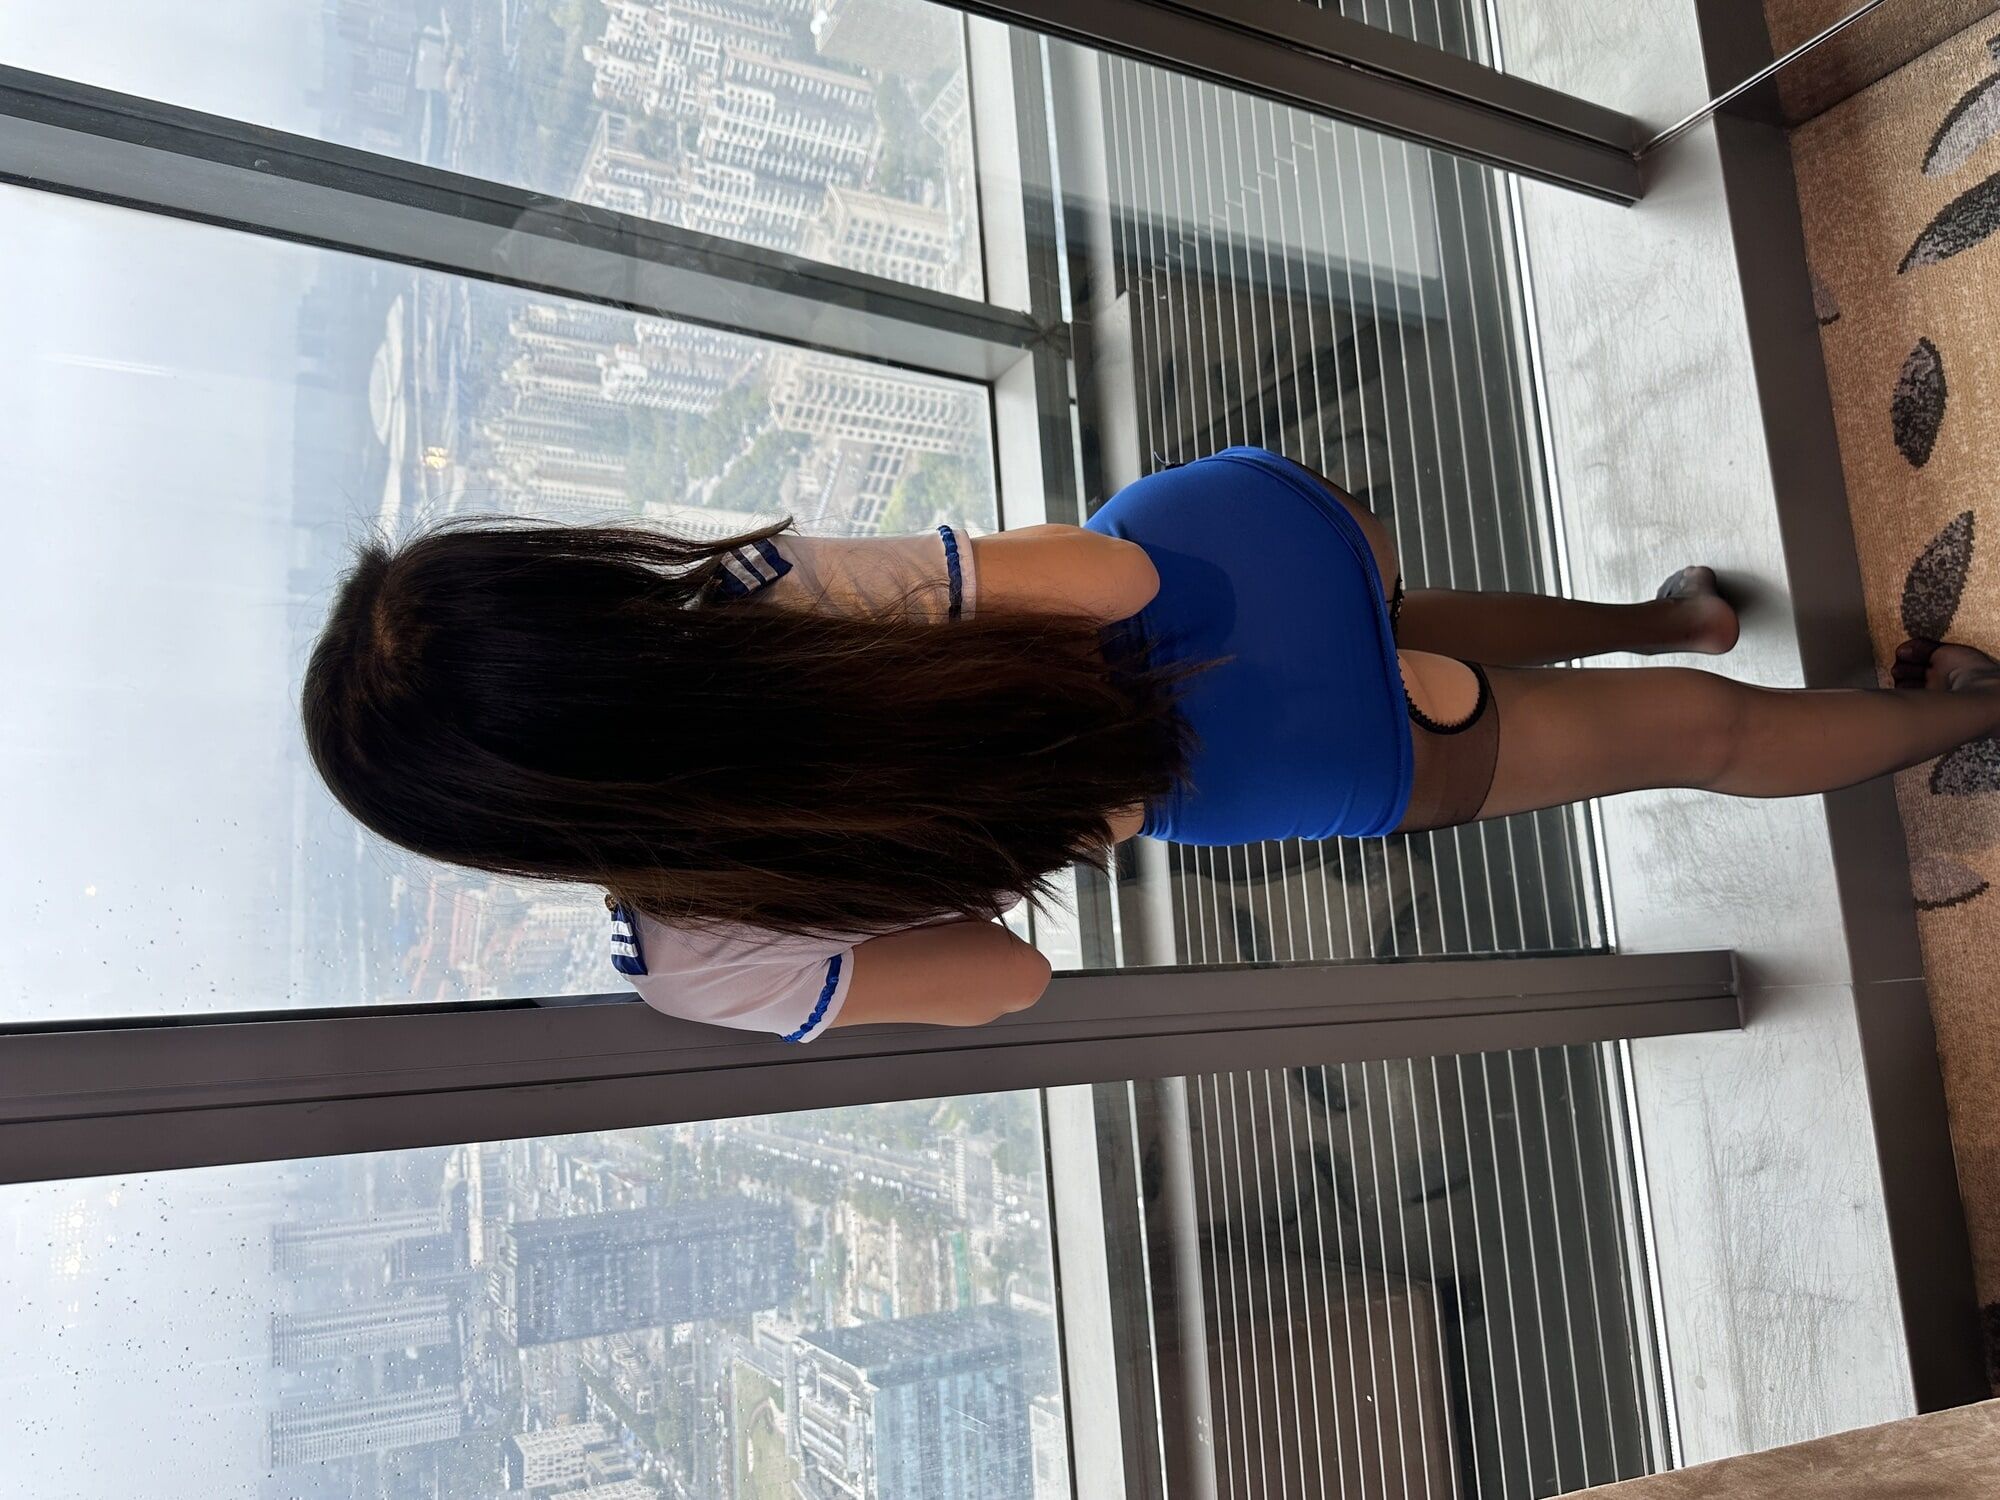 On the 58th floor #3